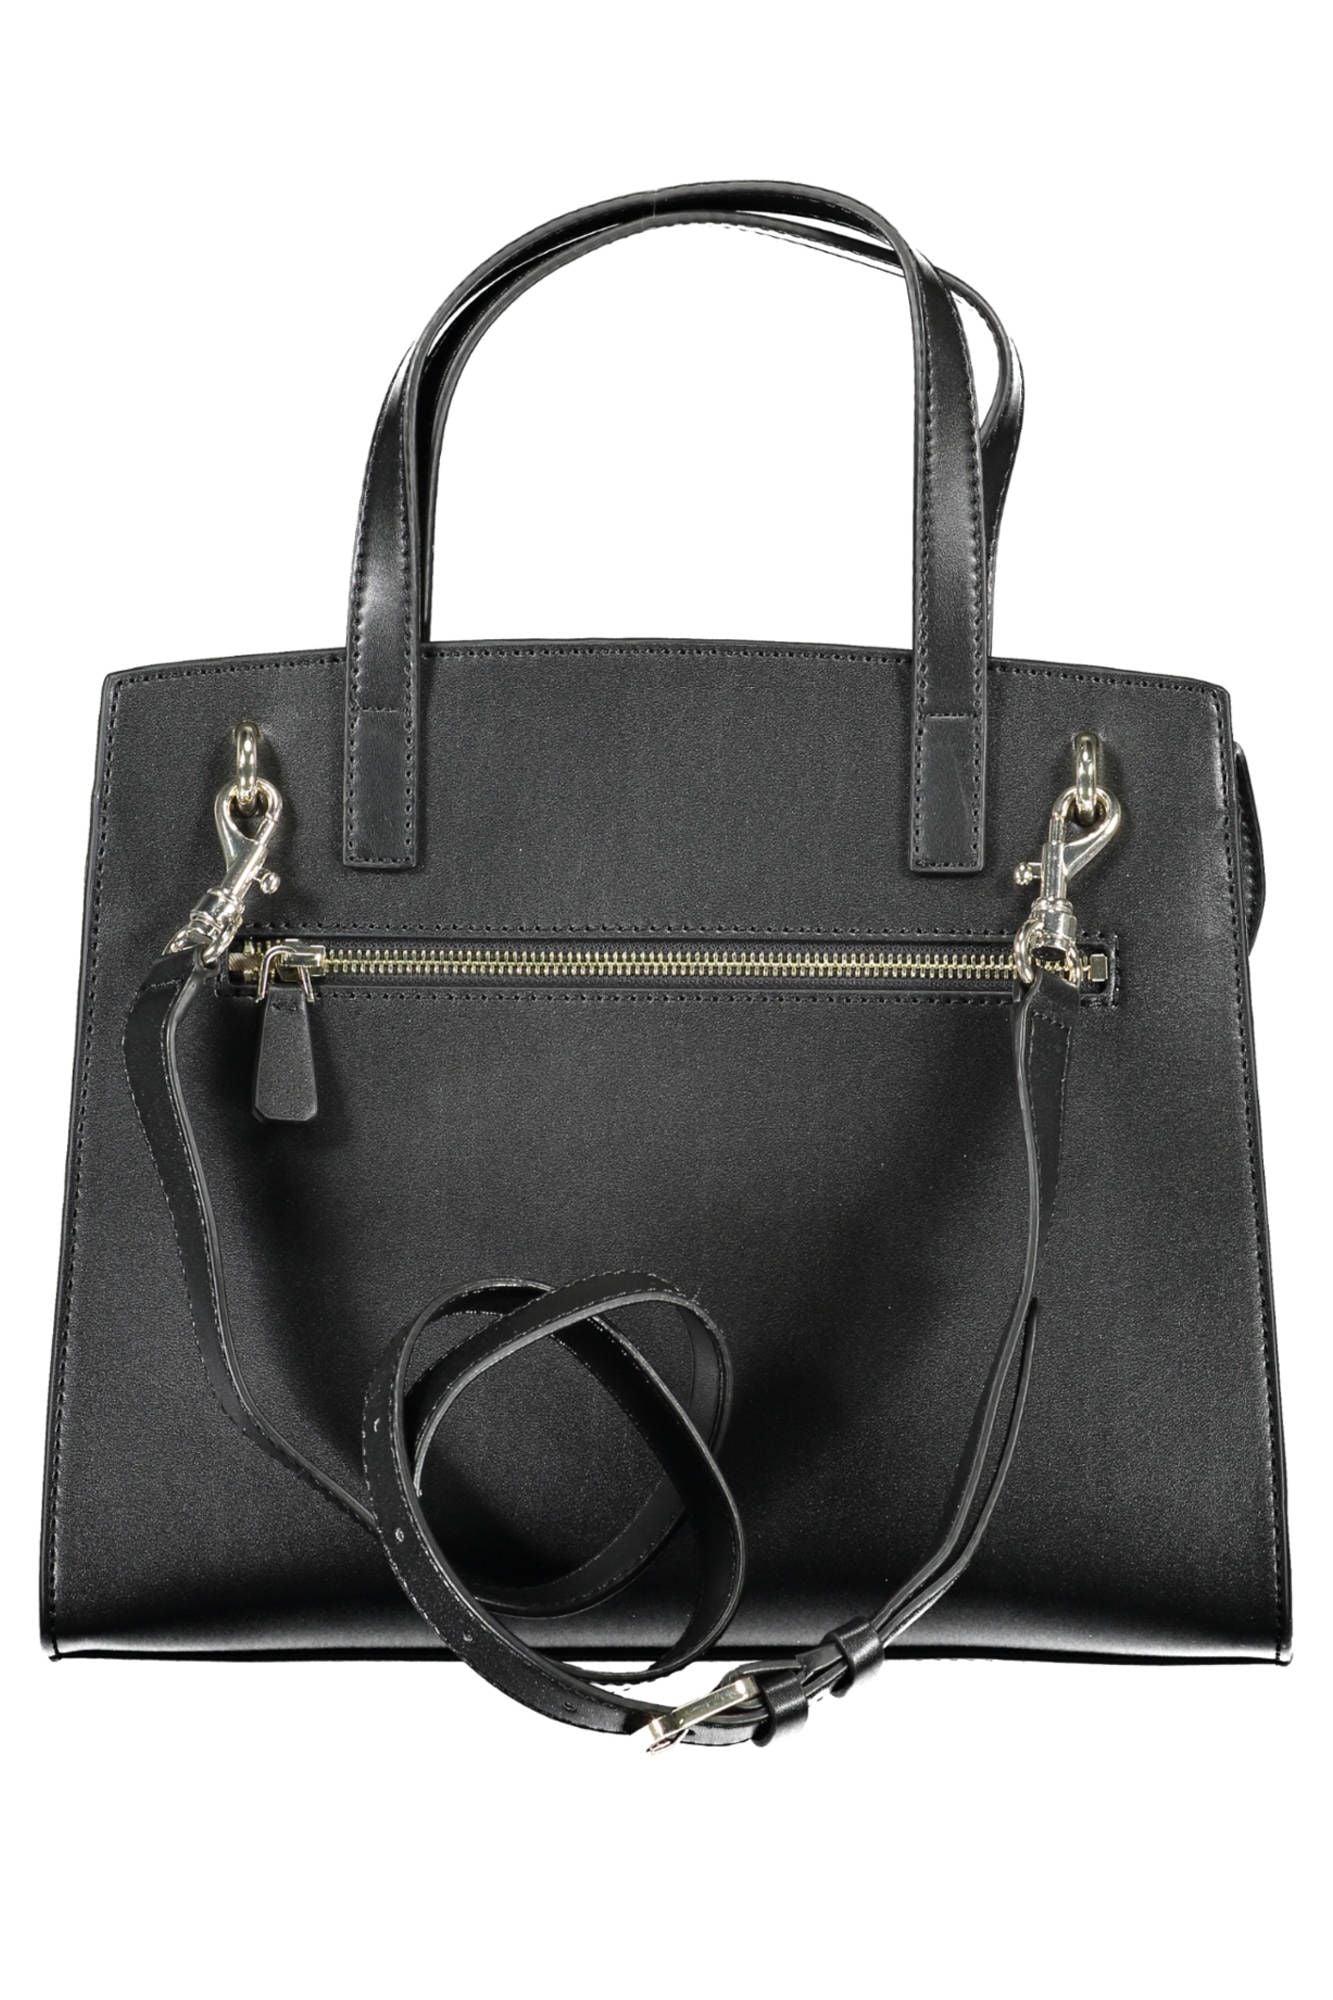 Guess Jeans Elegant Black Handbag with Versatile Straps